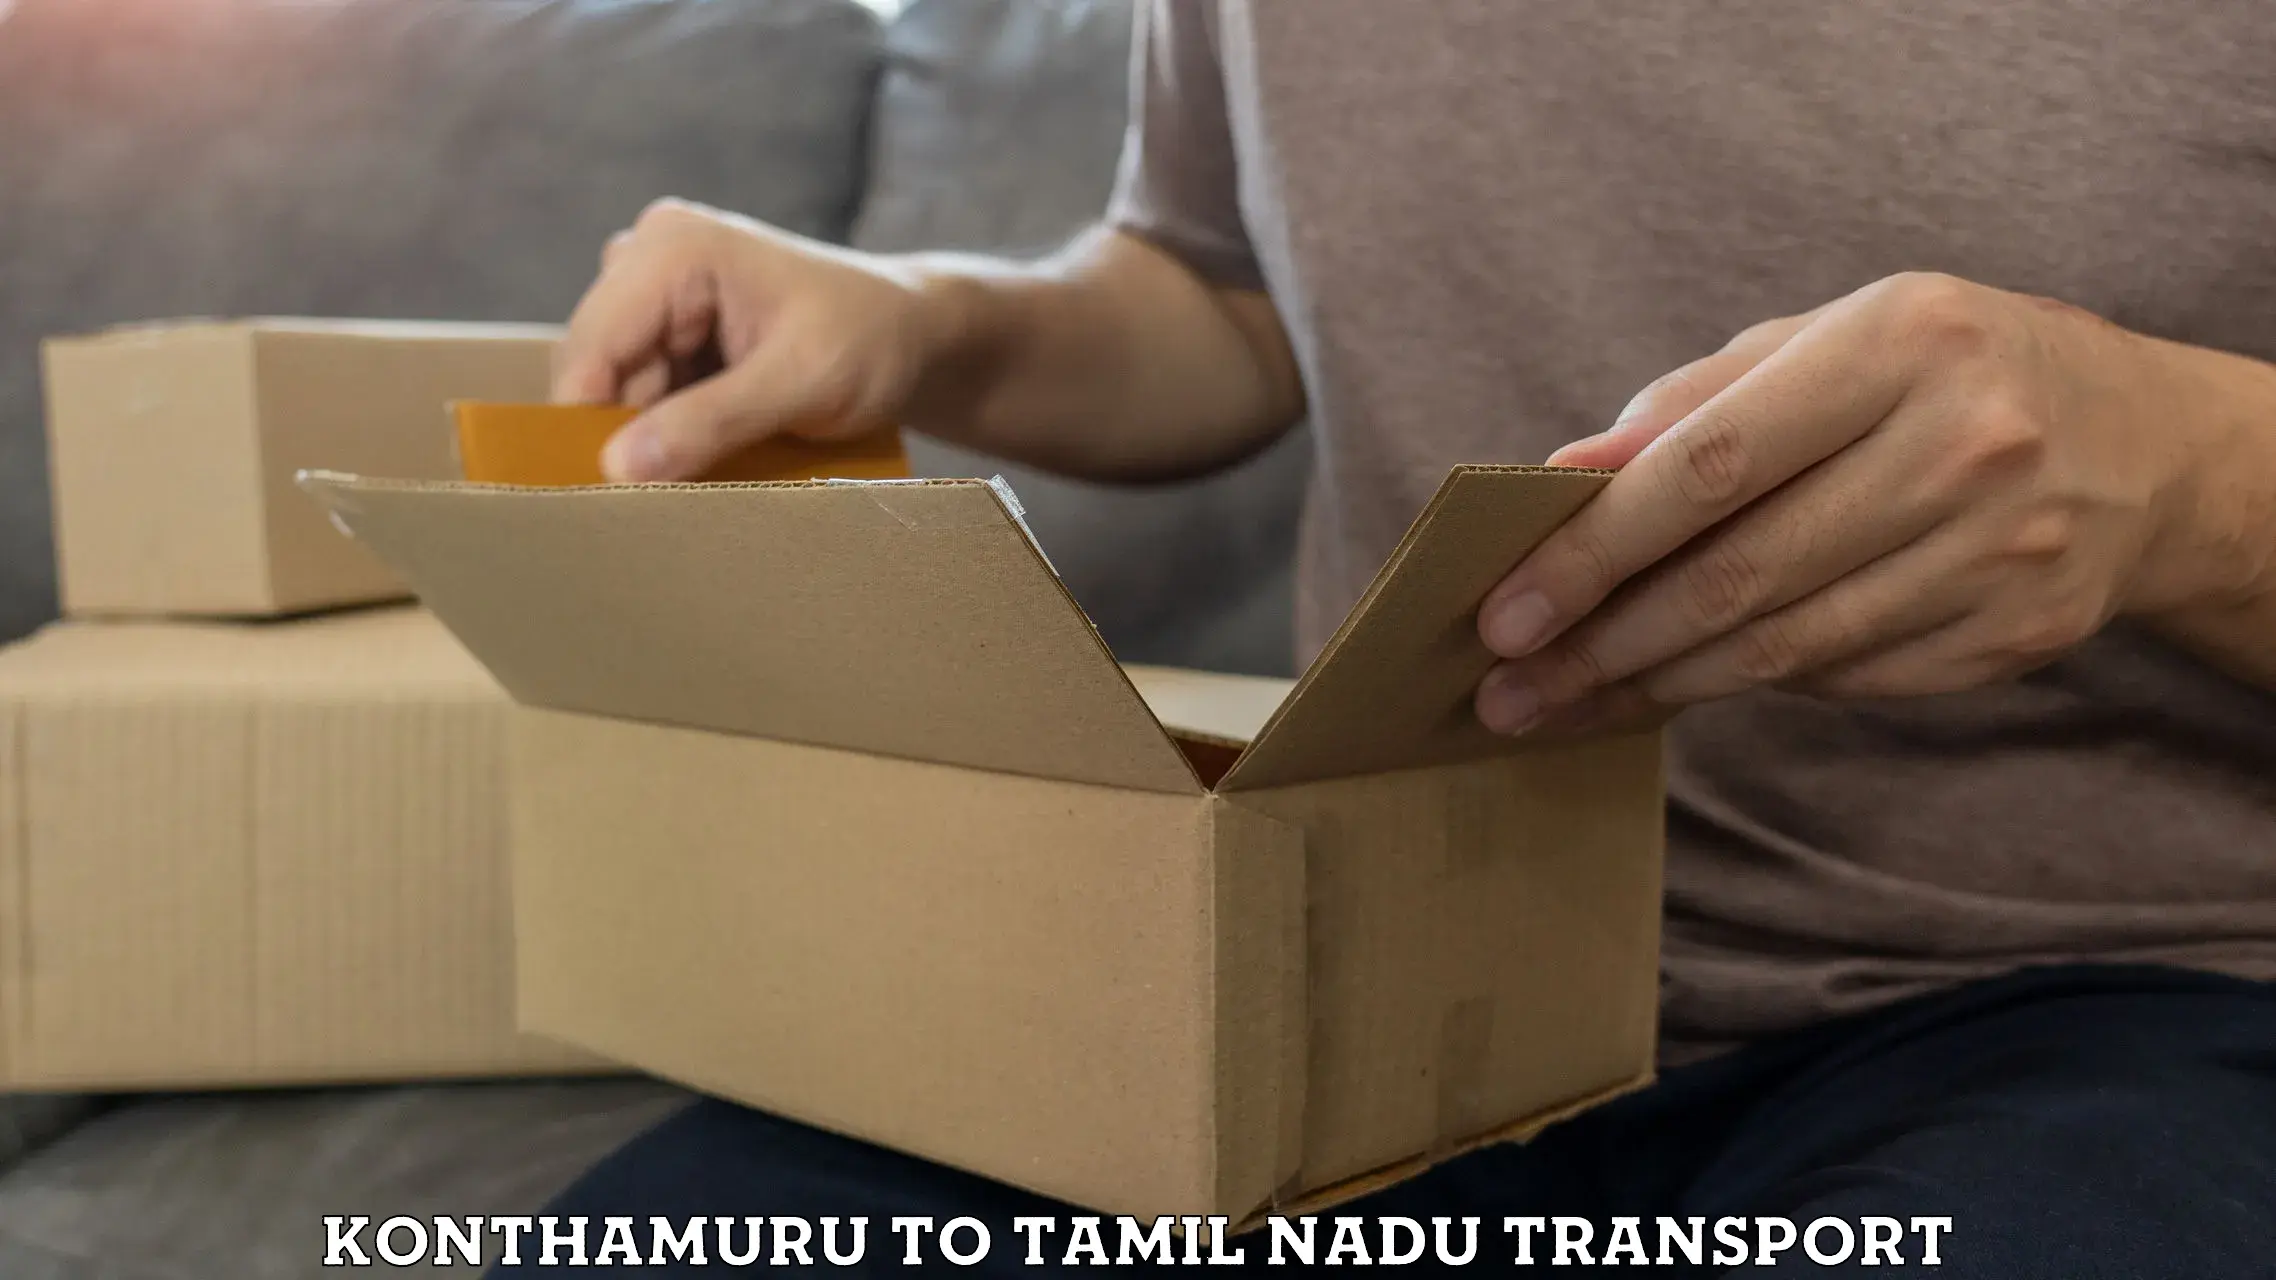 Online transport service Konthamuru to Tamil Nadu